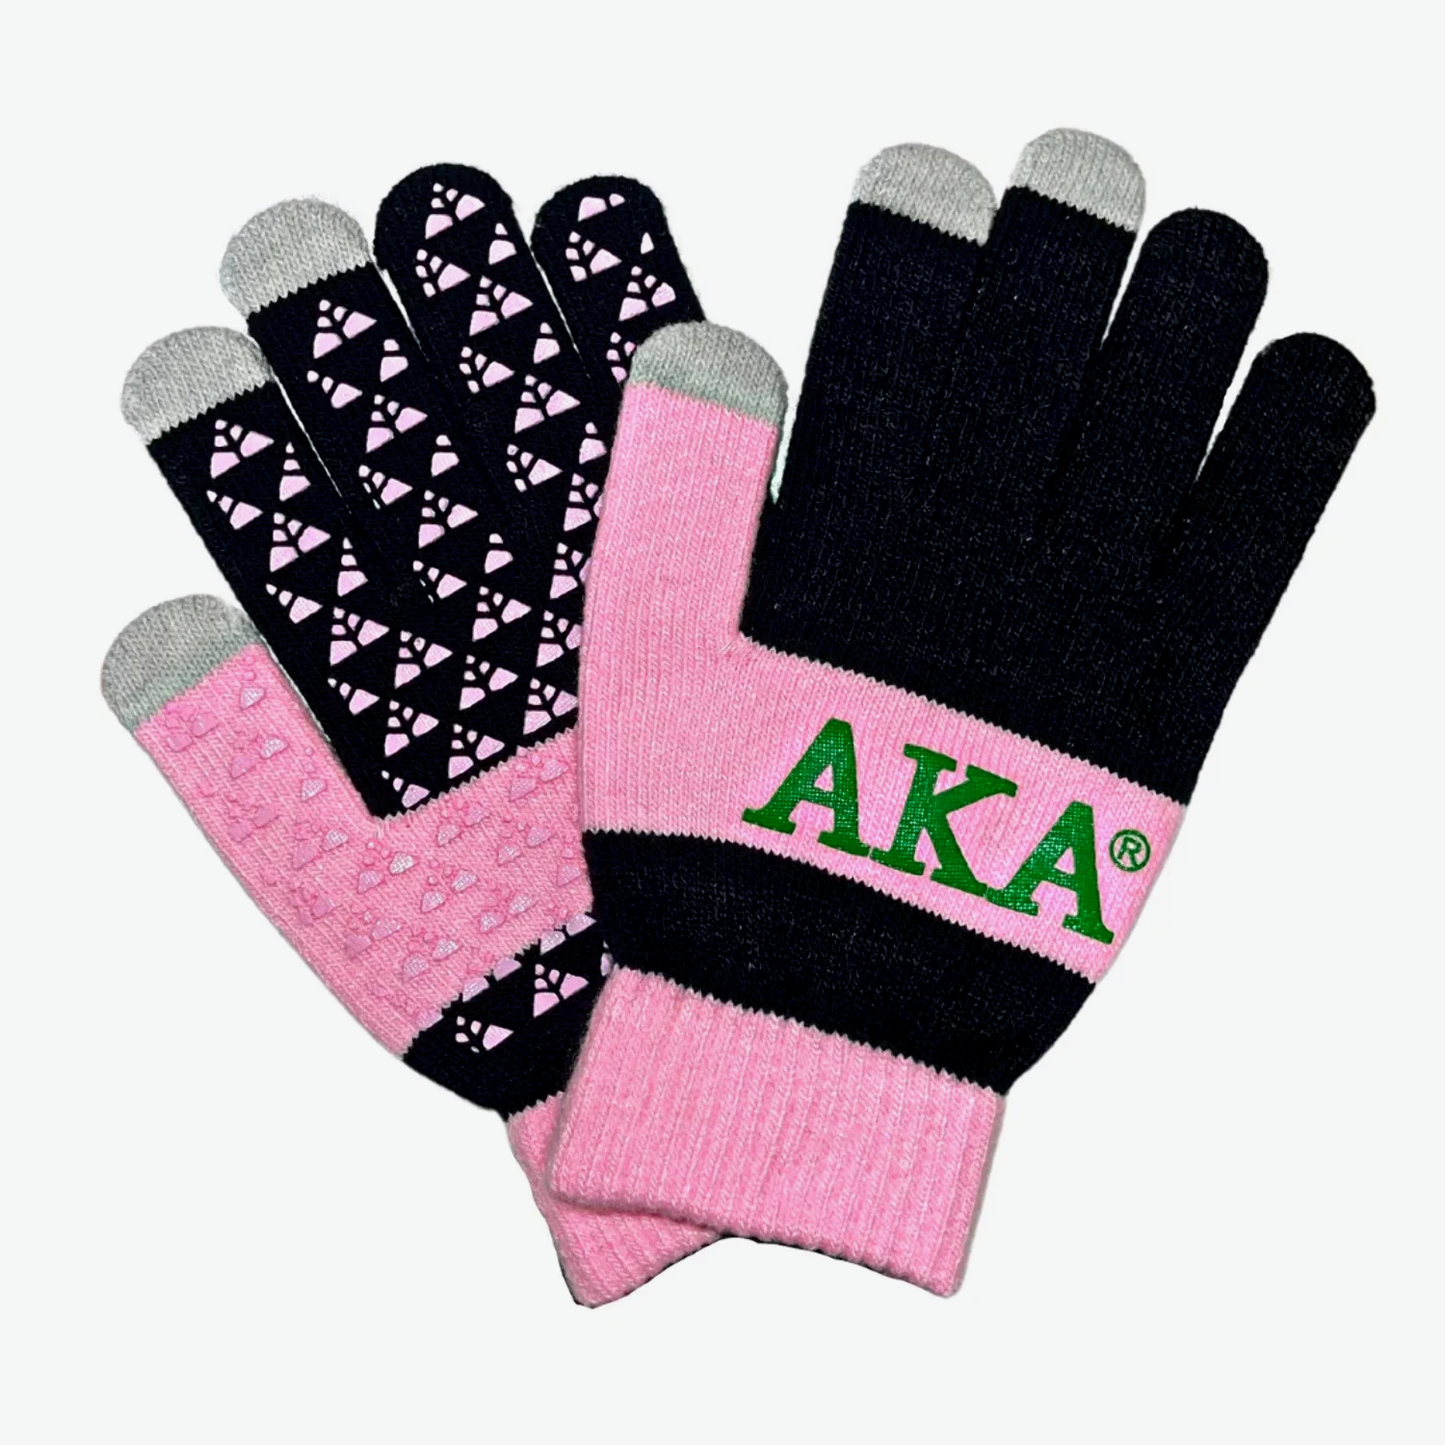 Alpha Kappa Alpha Gloves - Knit Texting Gloves